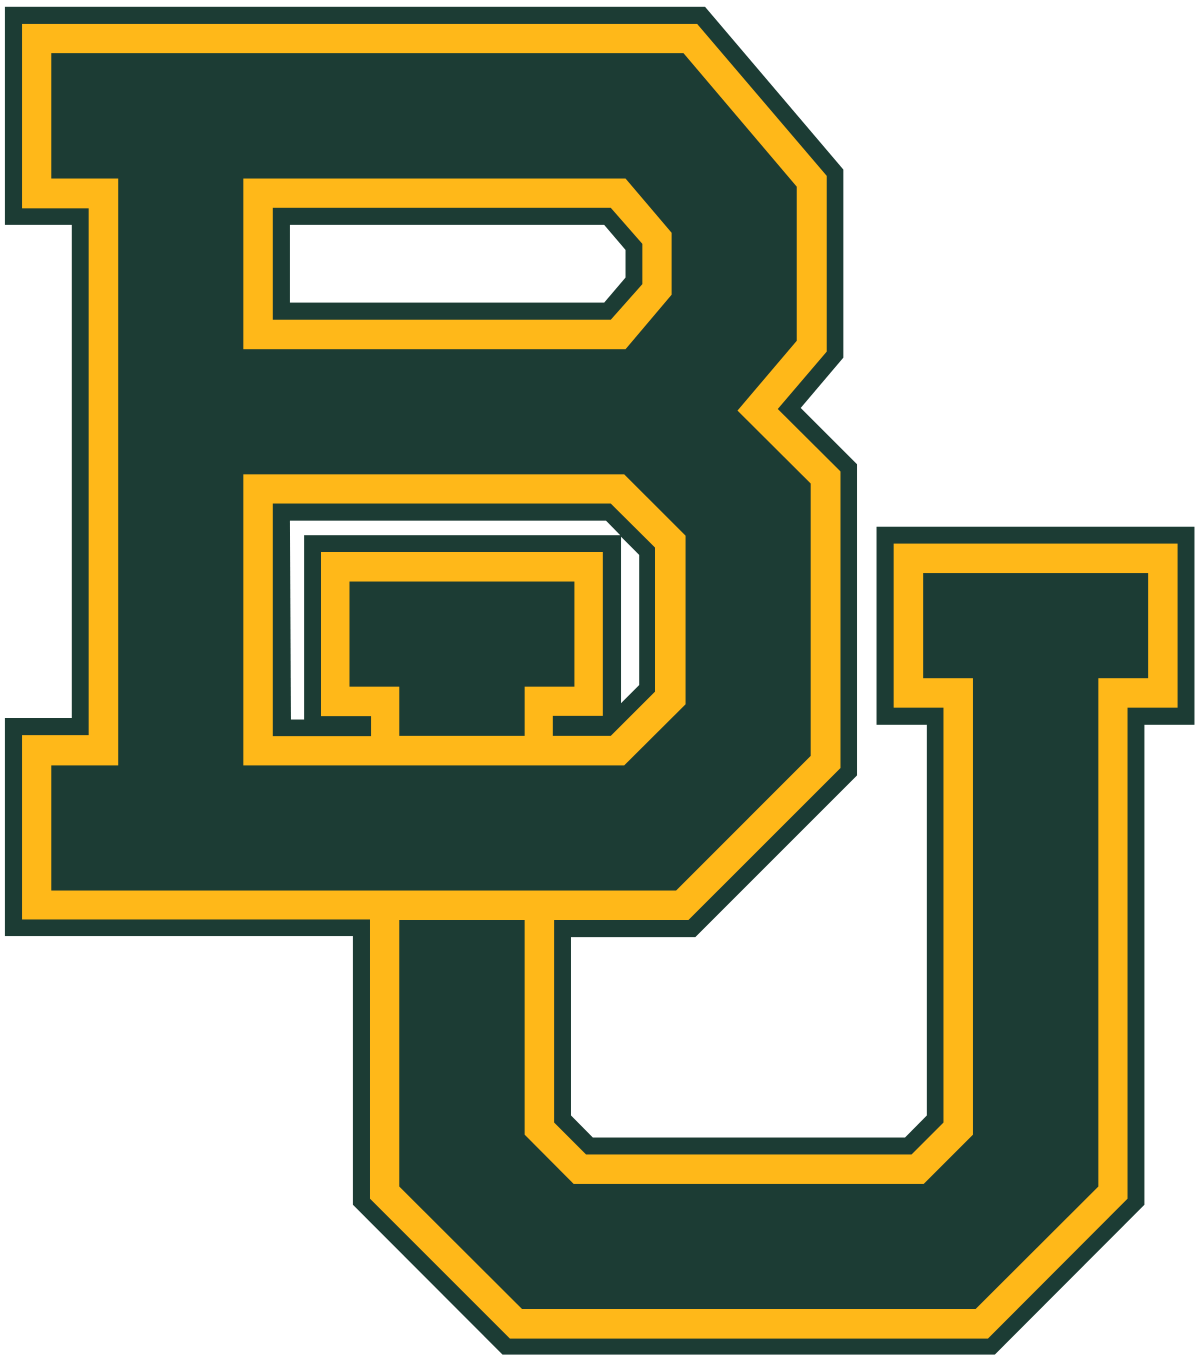 Baylor Bears Logo - Baylor Bears football